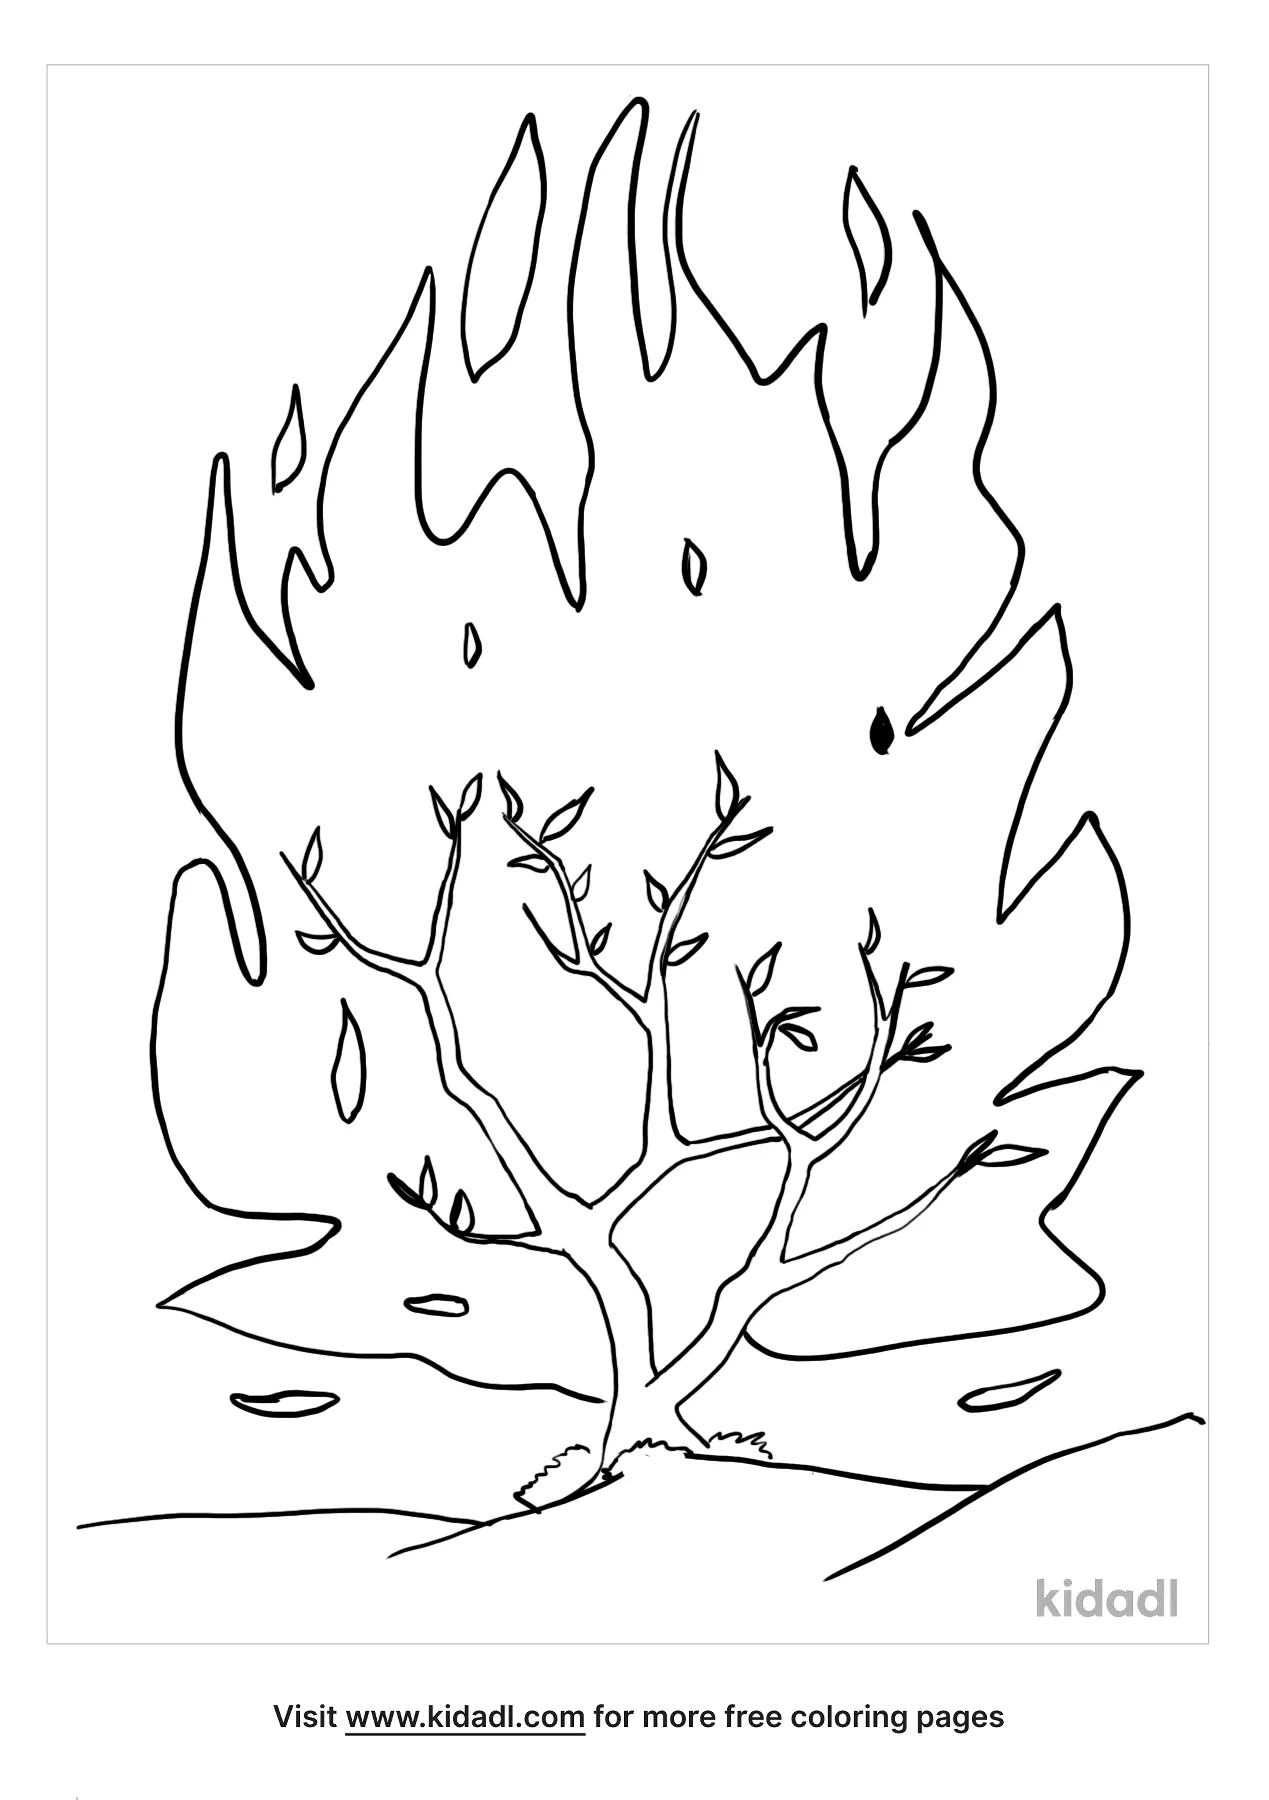 Free burning bush coloring page coloring page printables